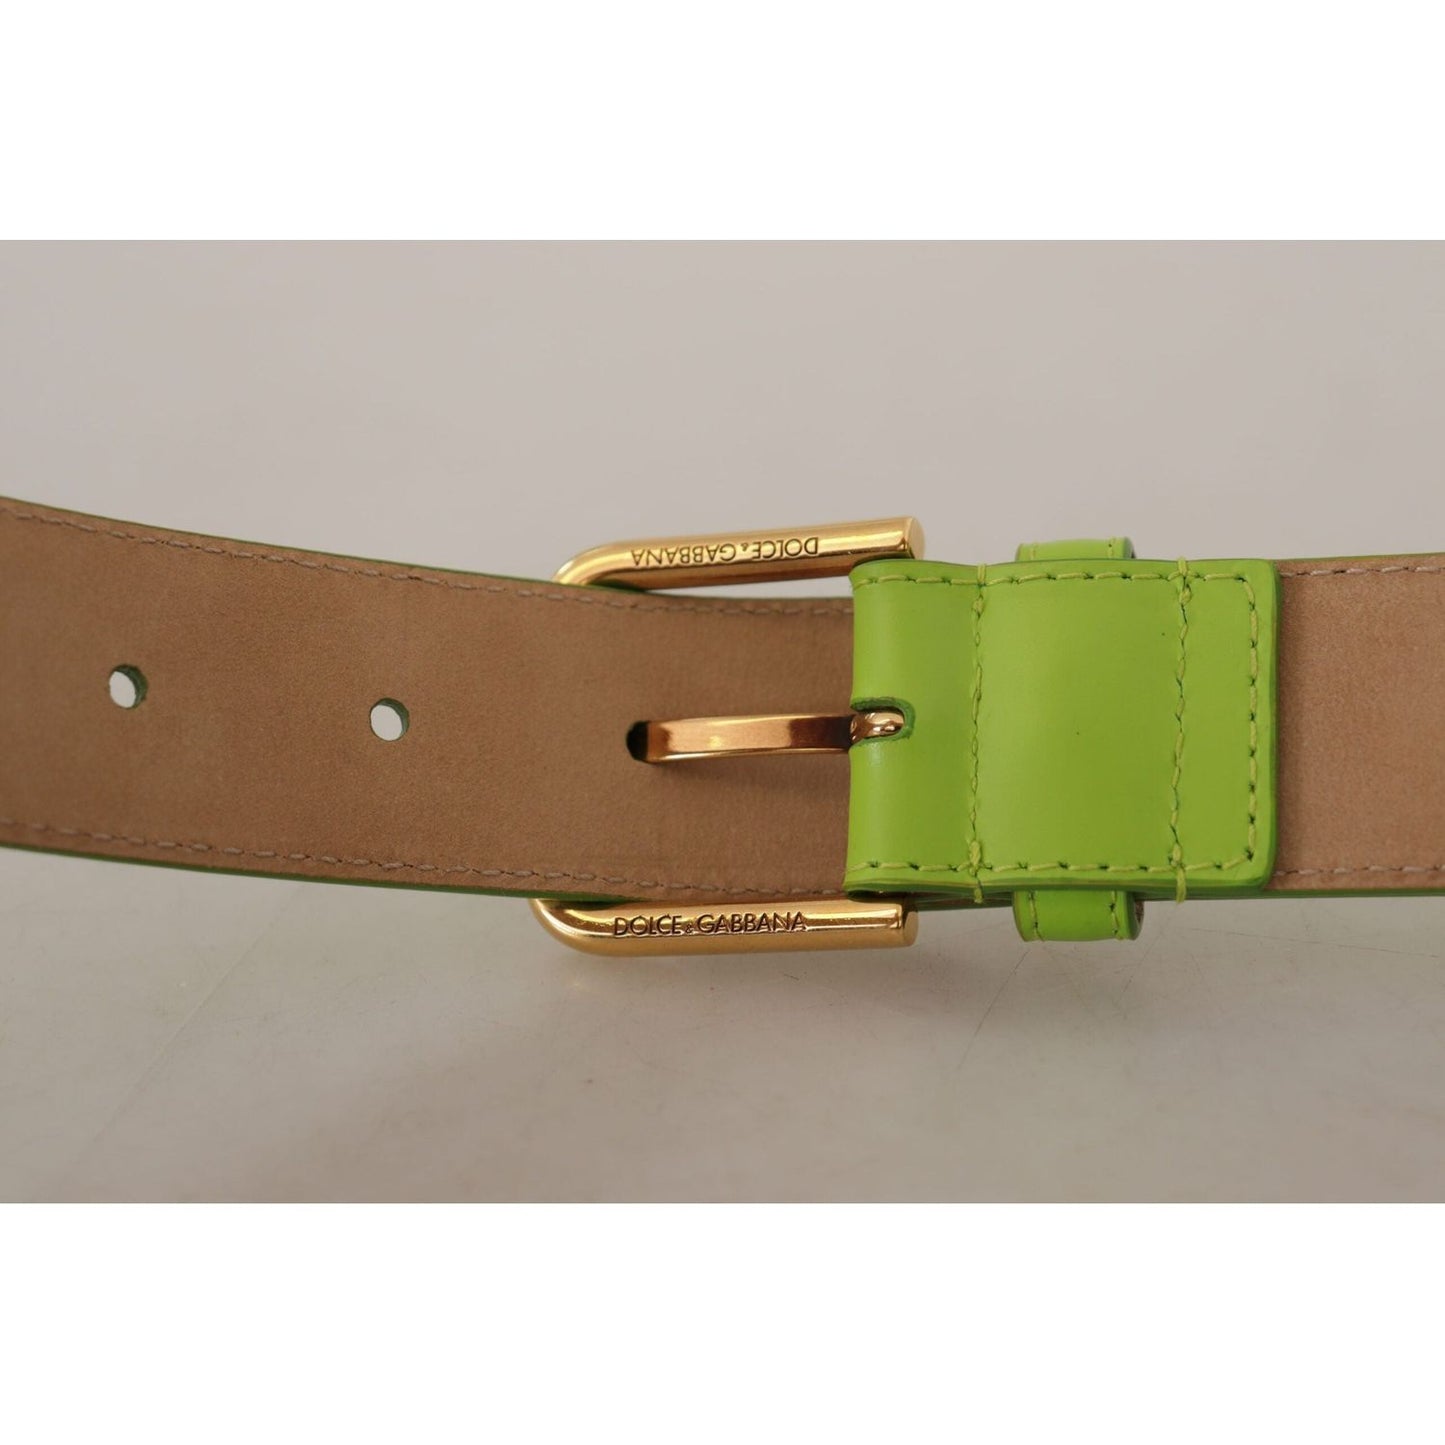 Dolce & Gabbana Elegant Leather Belt with Mini Bag Accessory green-leather-devotion-heart-micro-bag-headphones-belt IMG_9072-scaled-1bdfbb11-be3.jpg